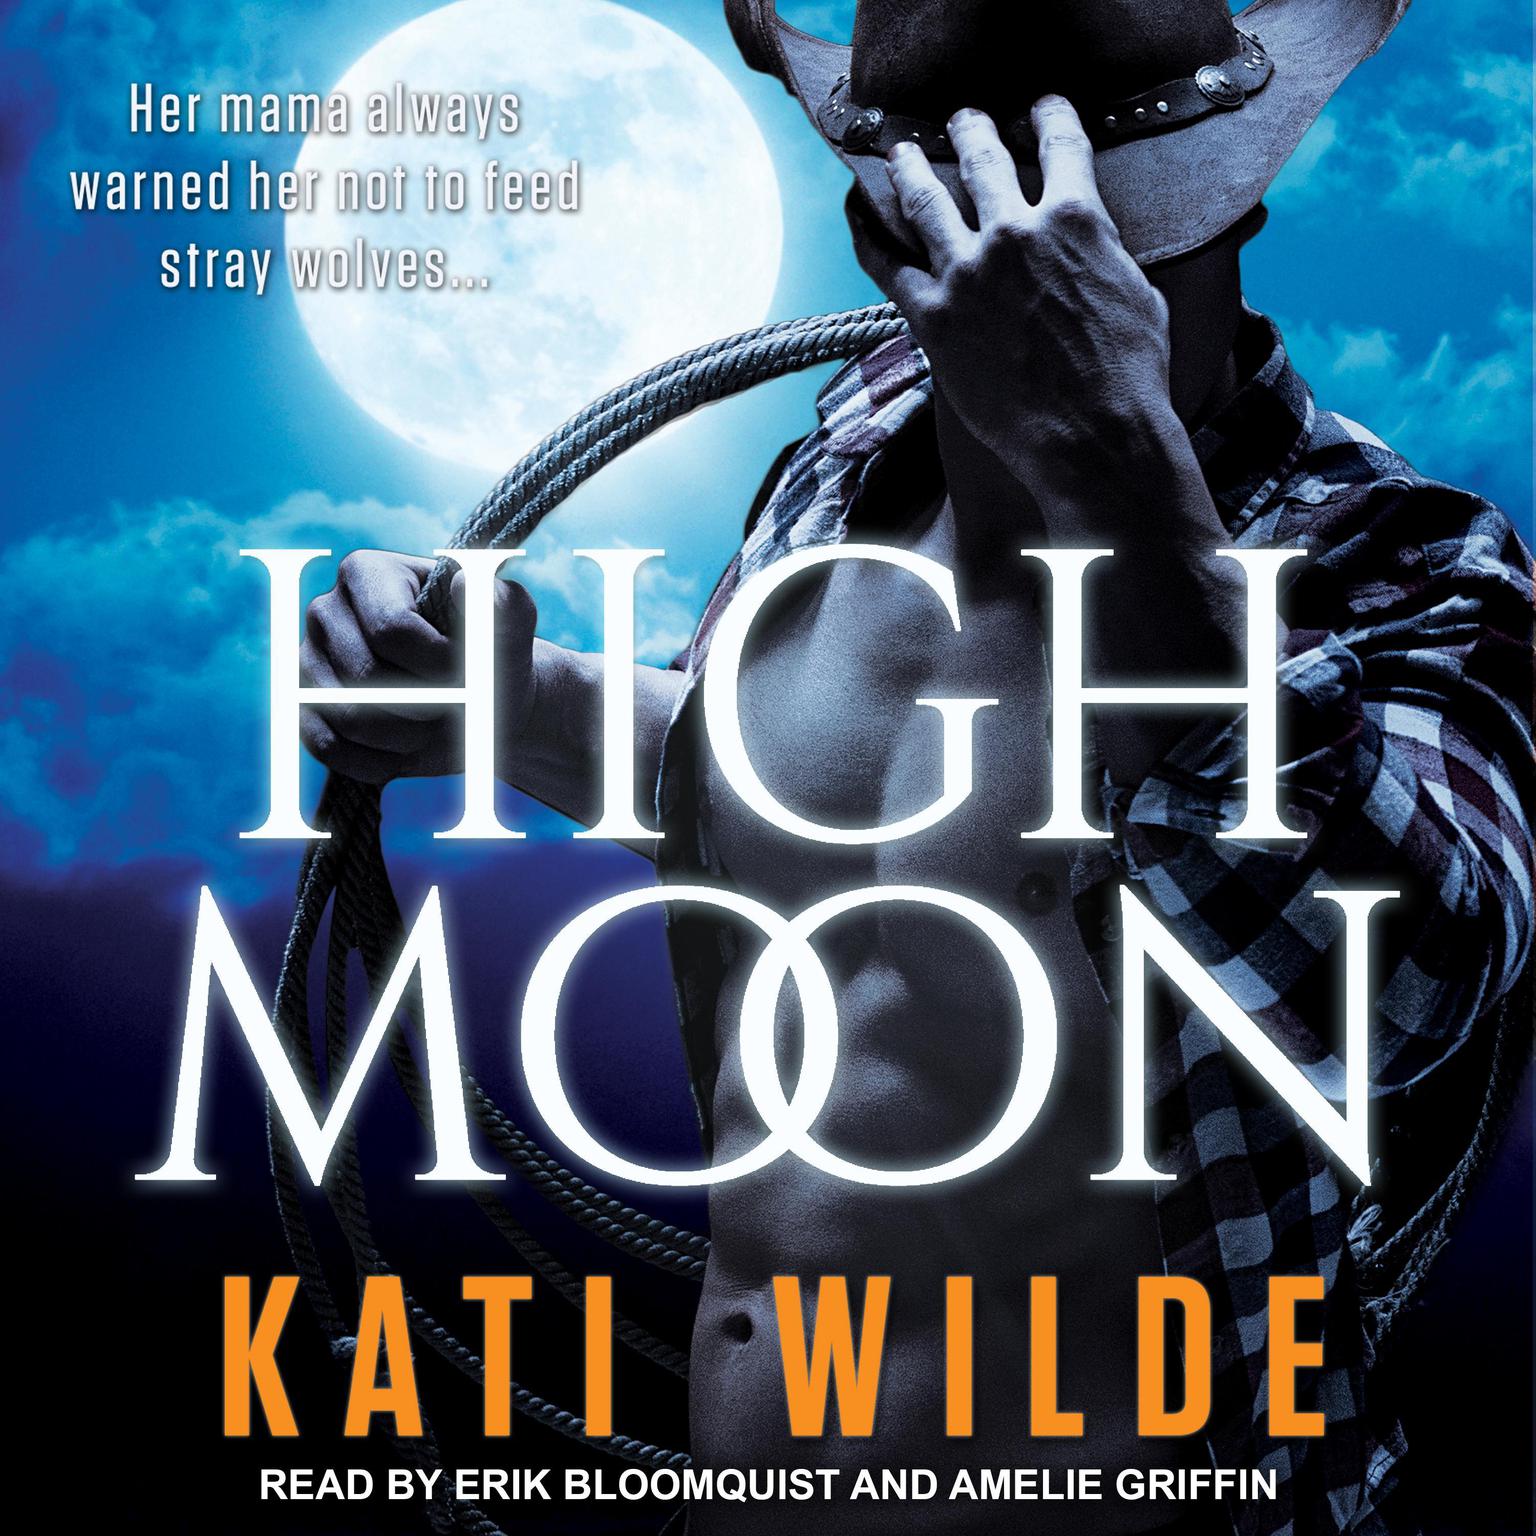 High Moon Audiobook, by Kati Wilde